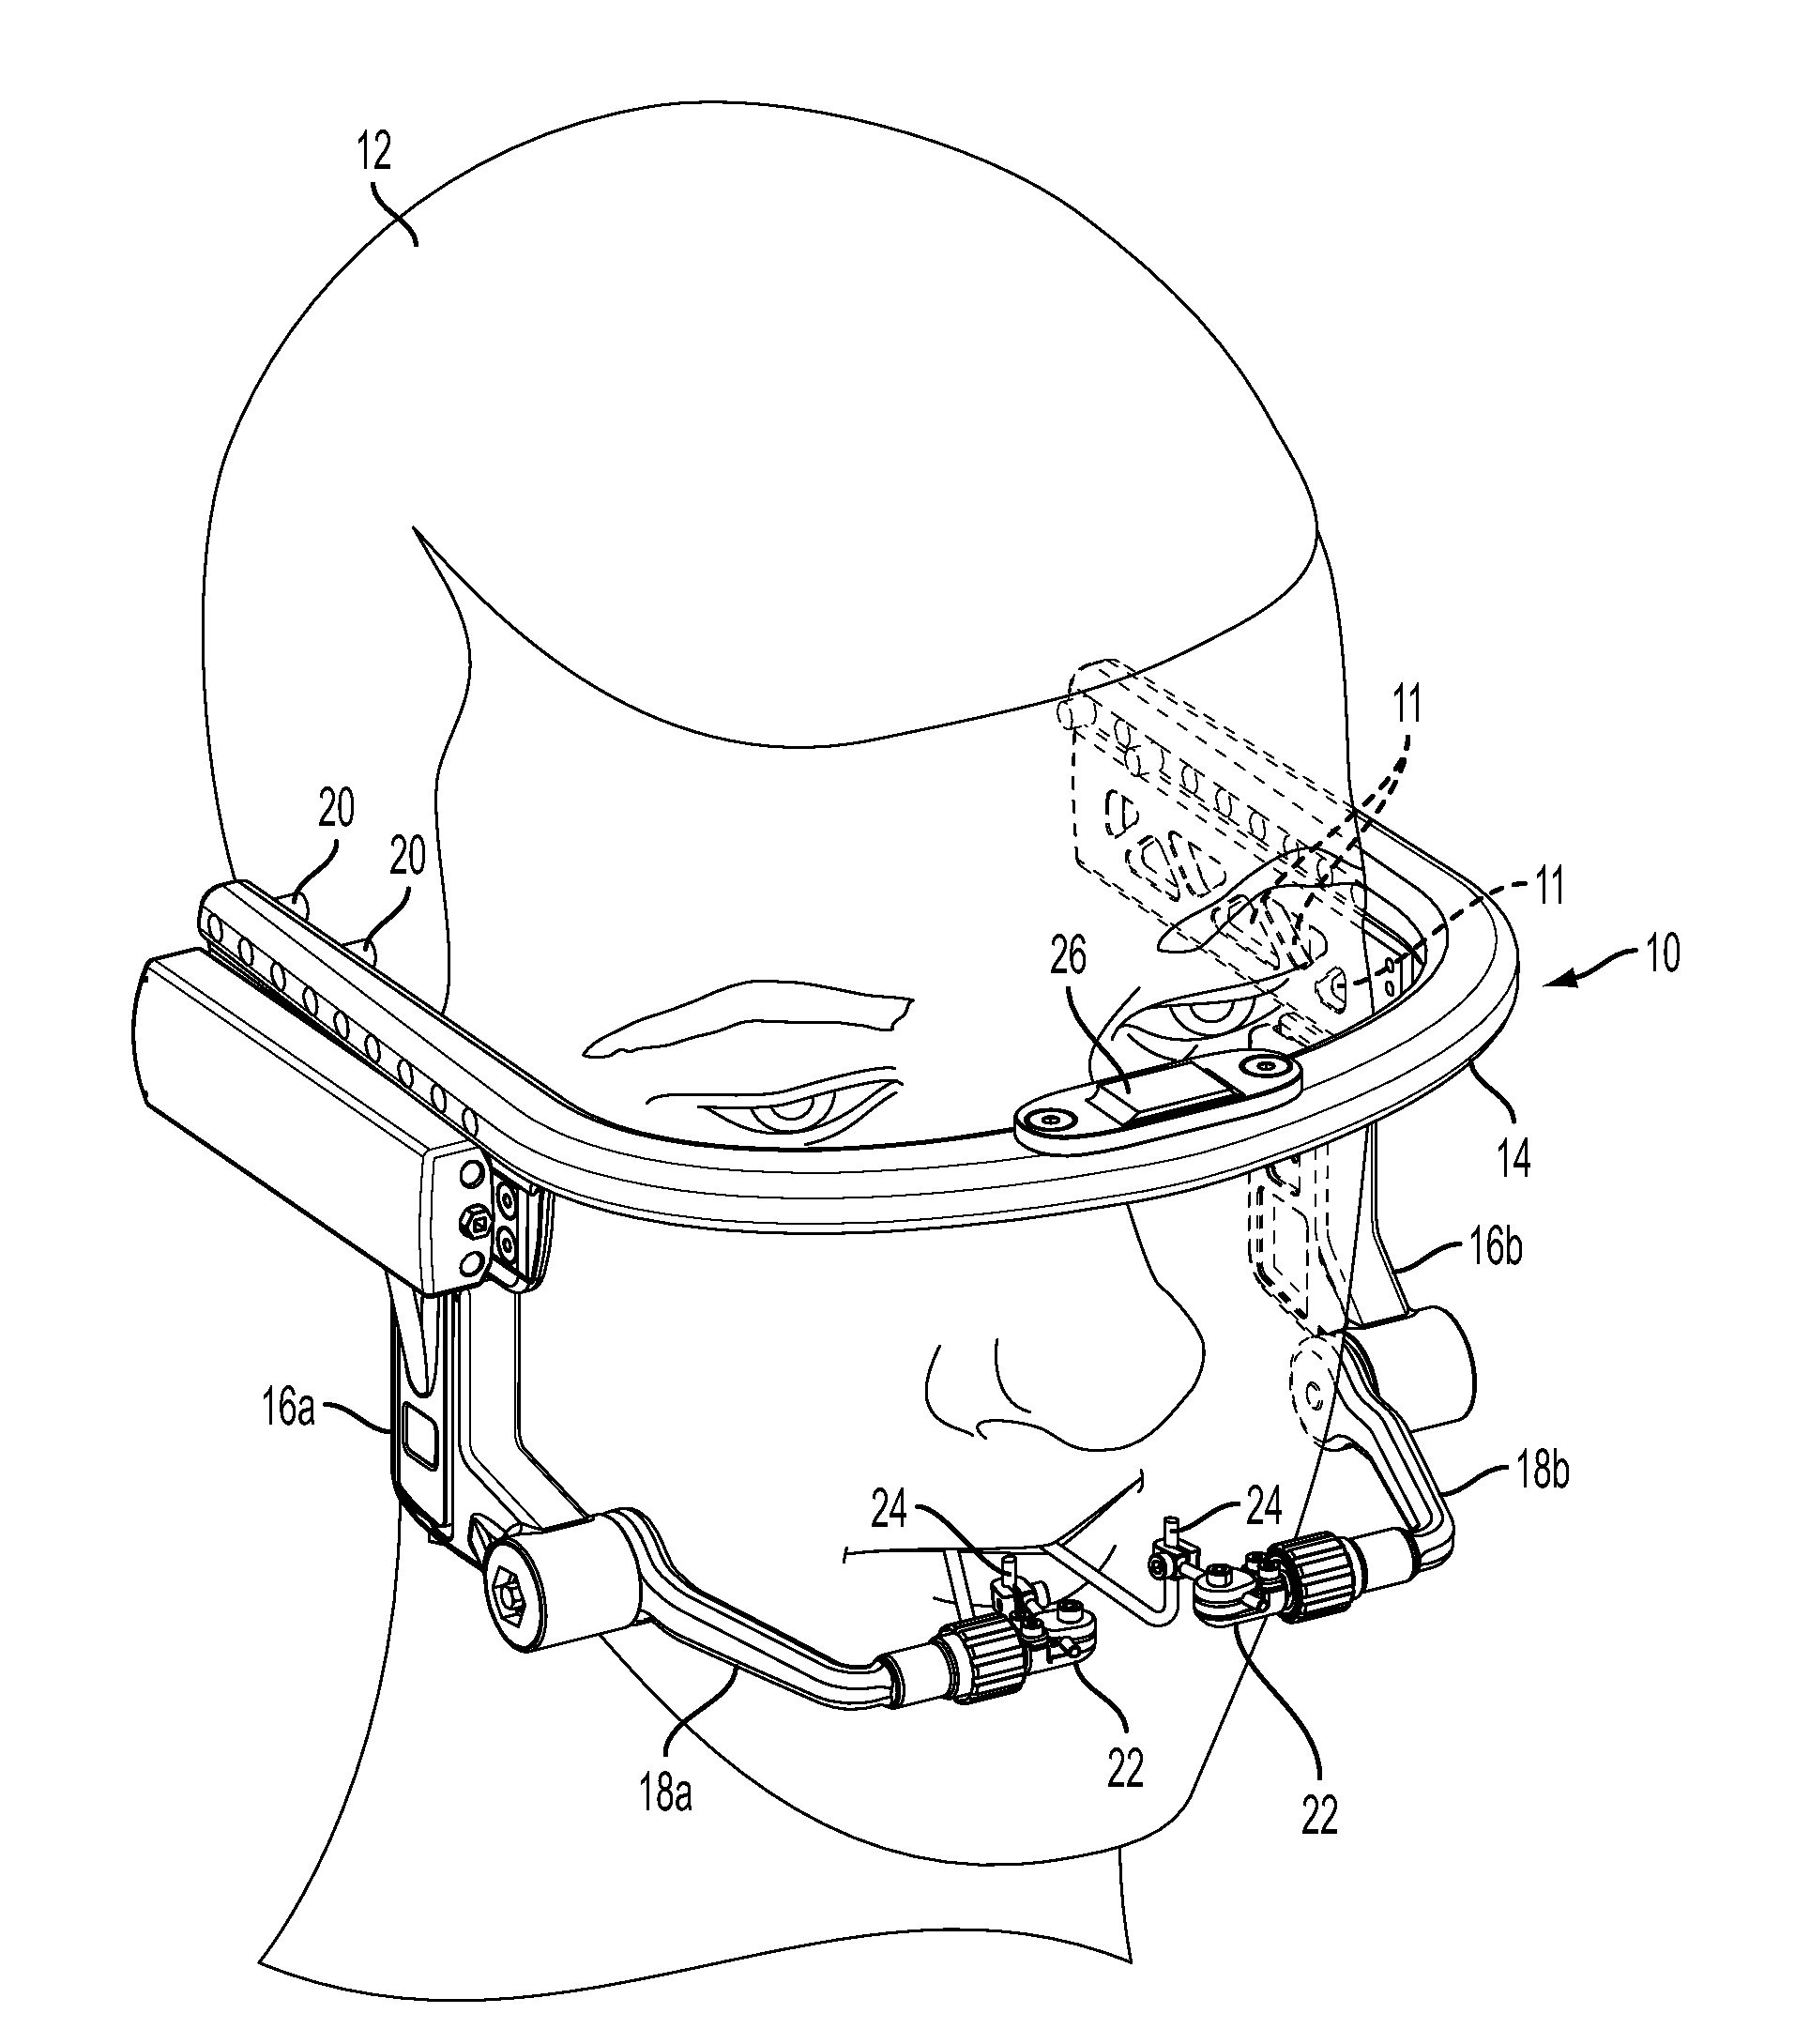 Craniofacial External Distraction Apparatus